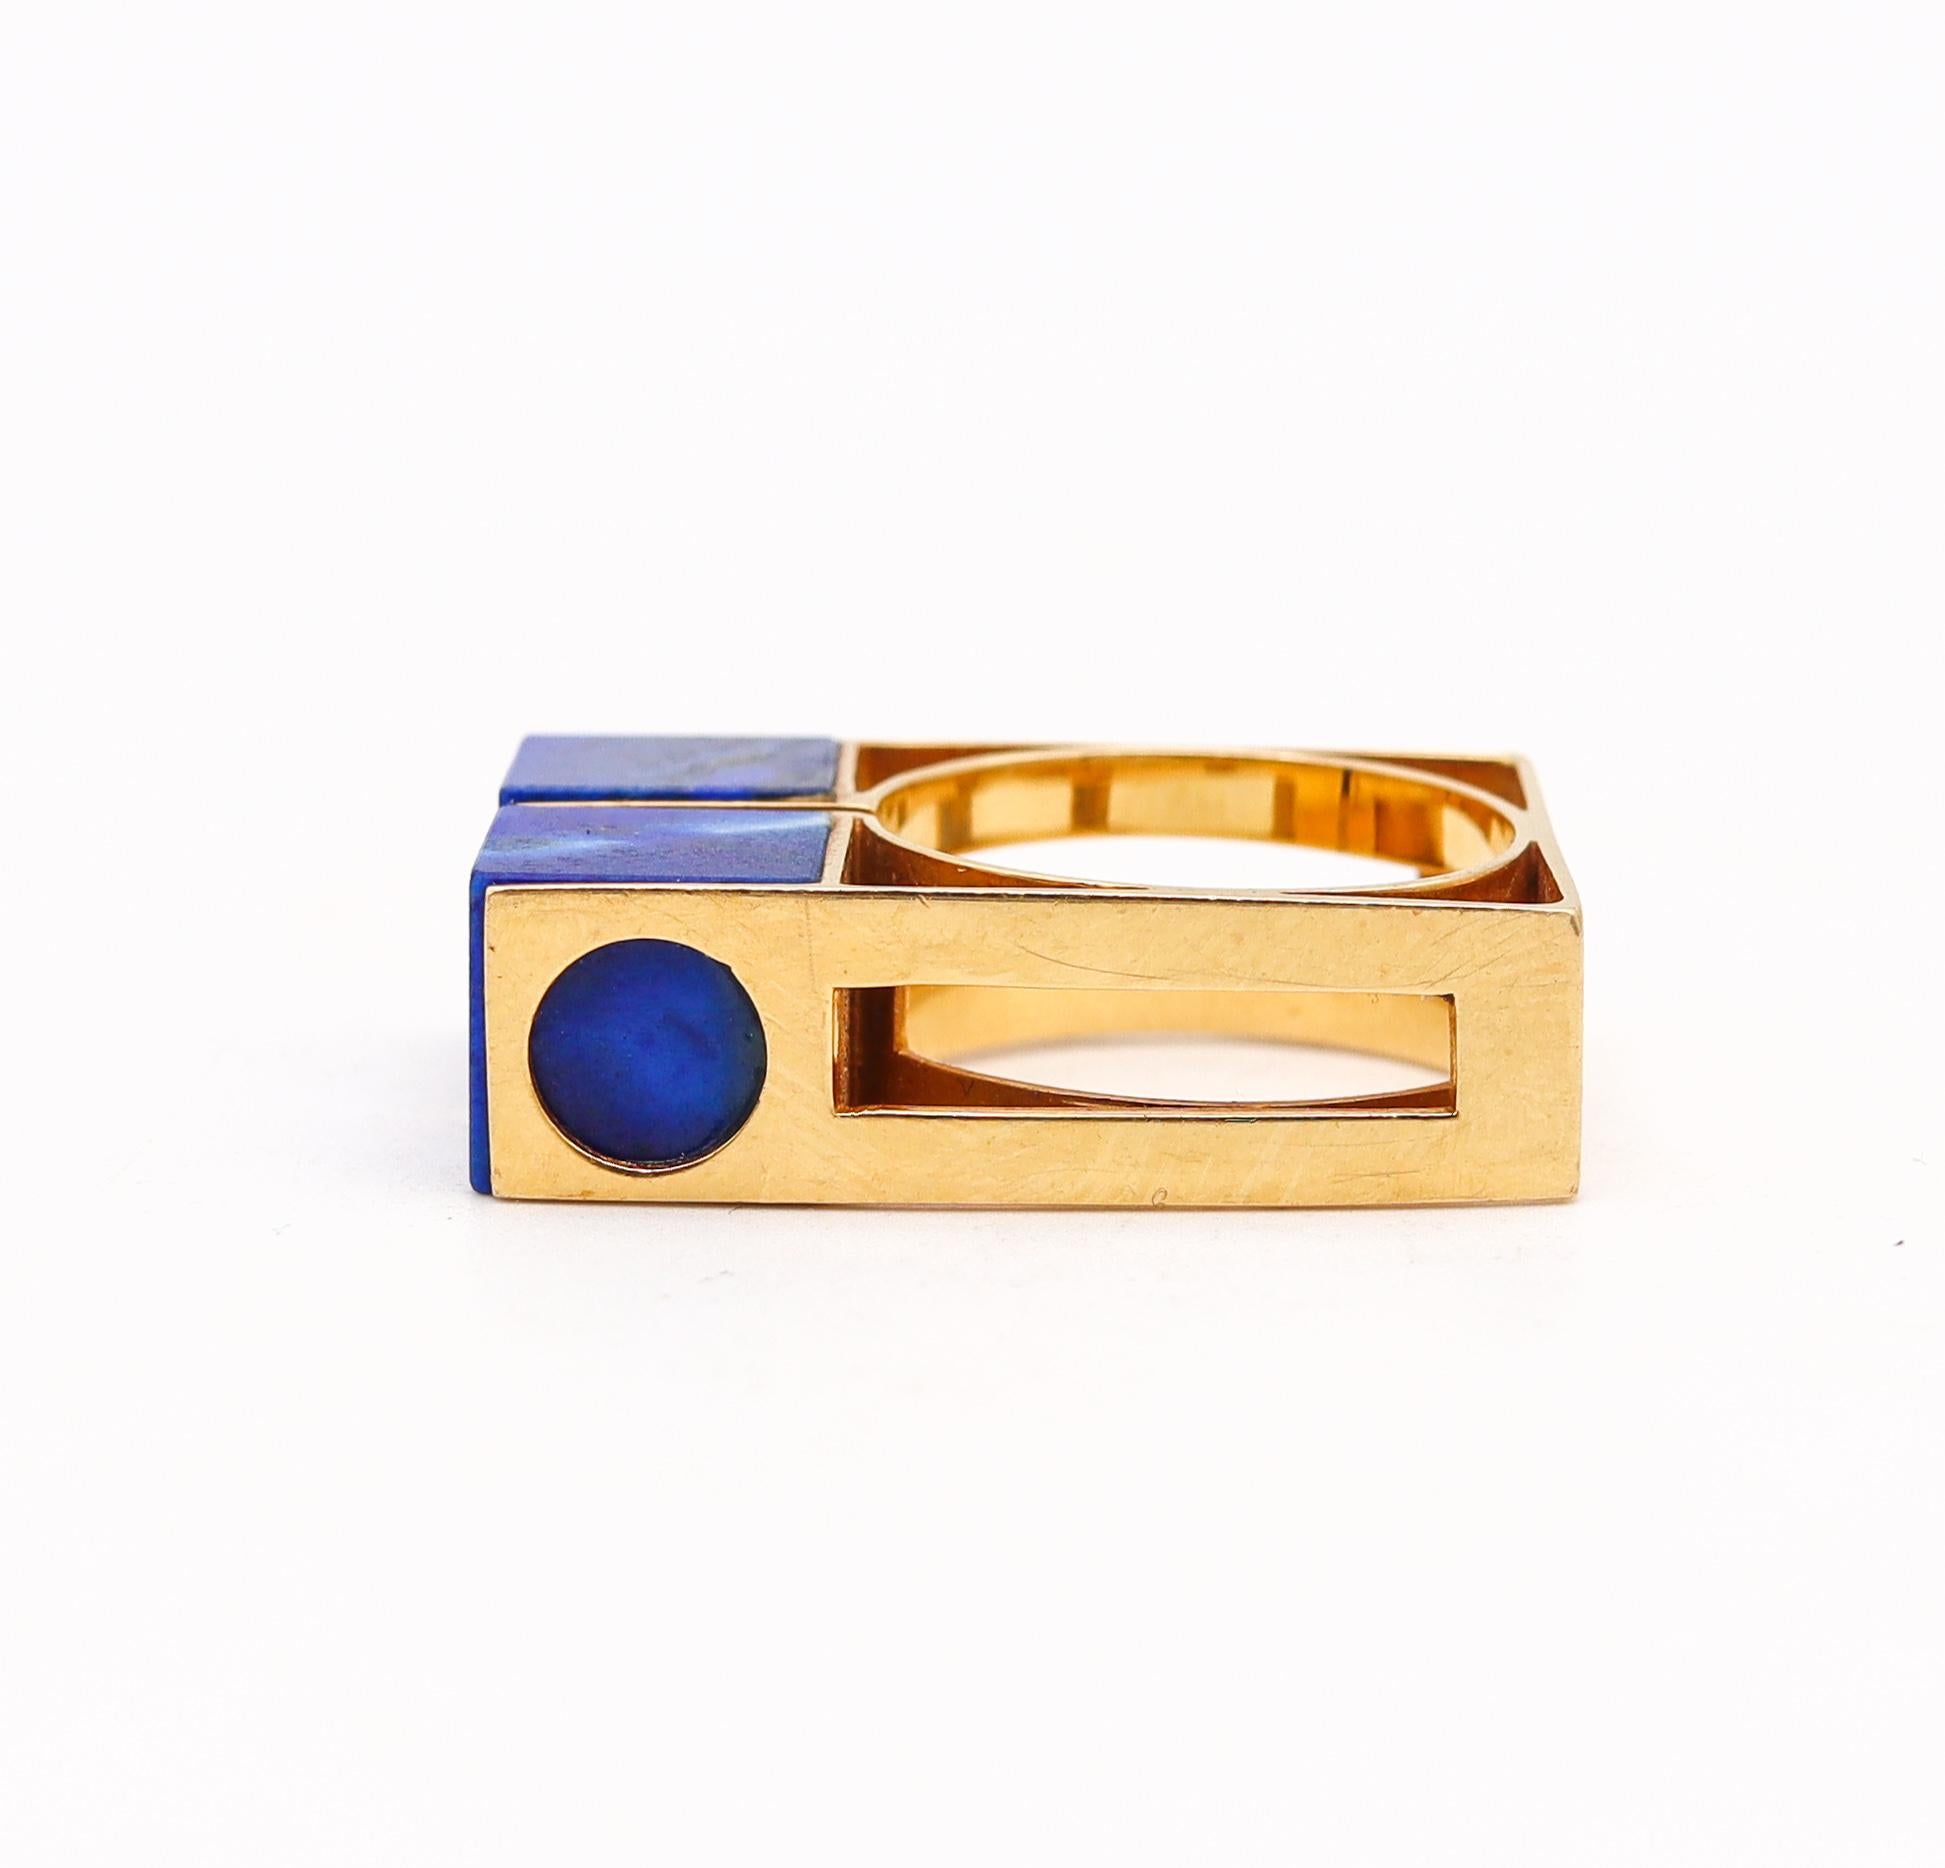 Octavio Sarda Palau 1970 Barcelona Geometric Ring in 18Kt Gold and Lapis Lazuli 2